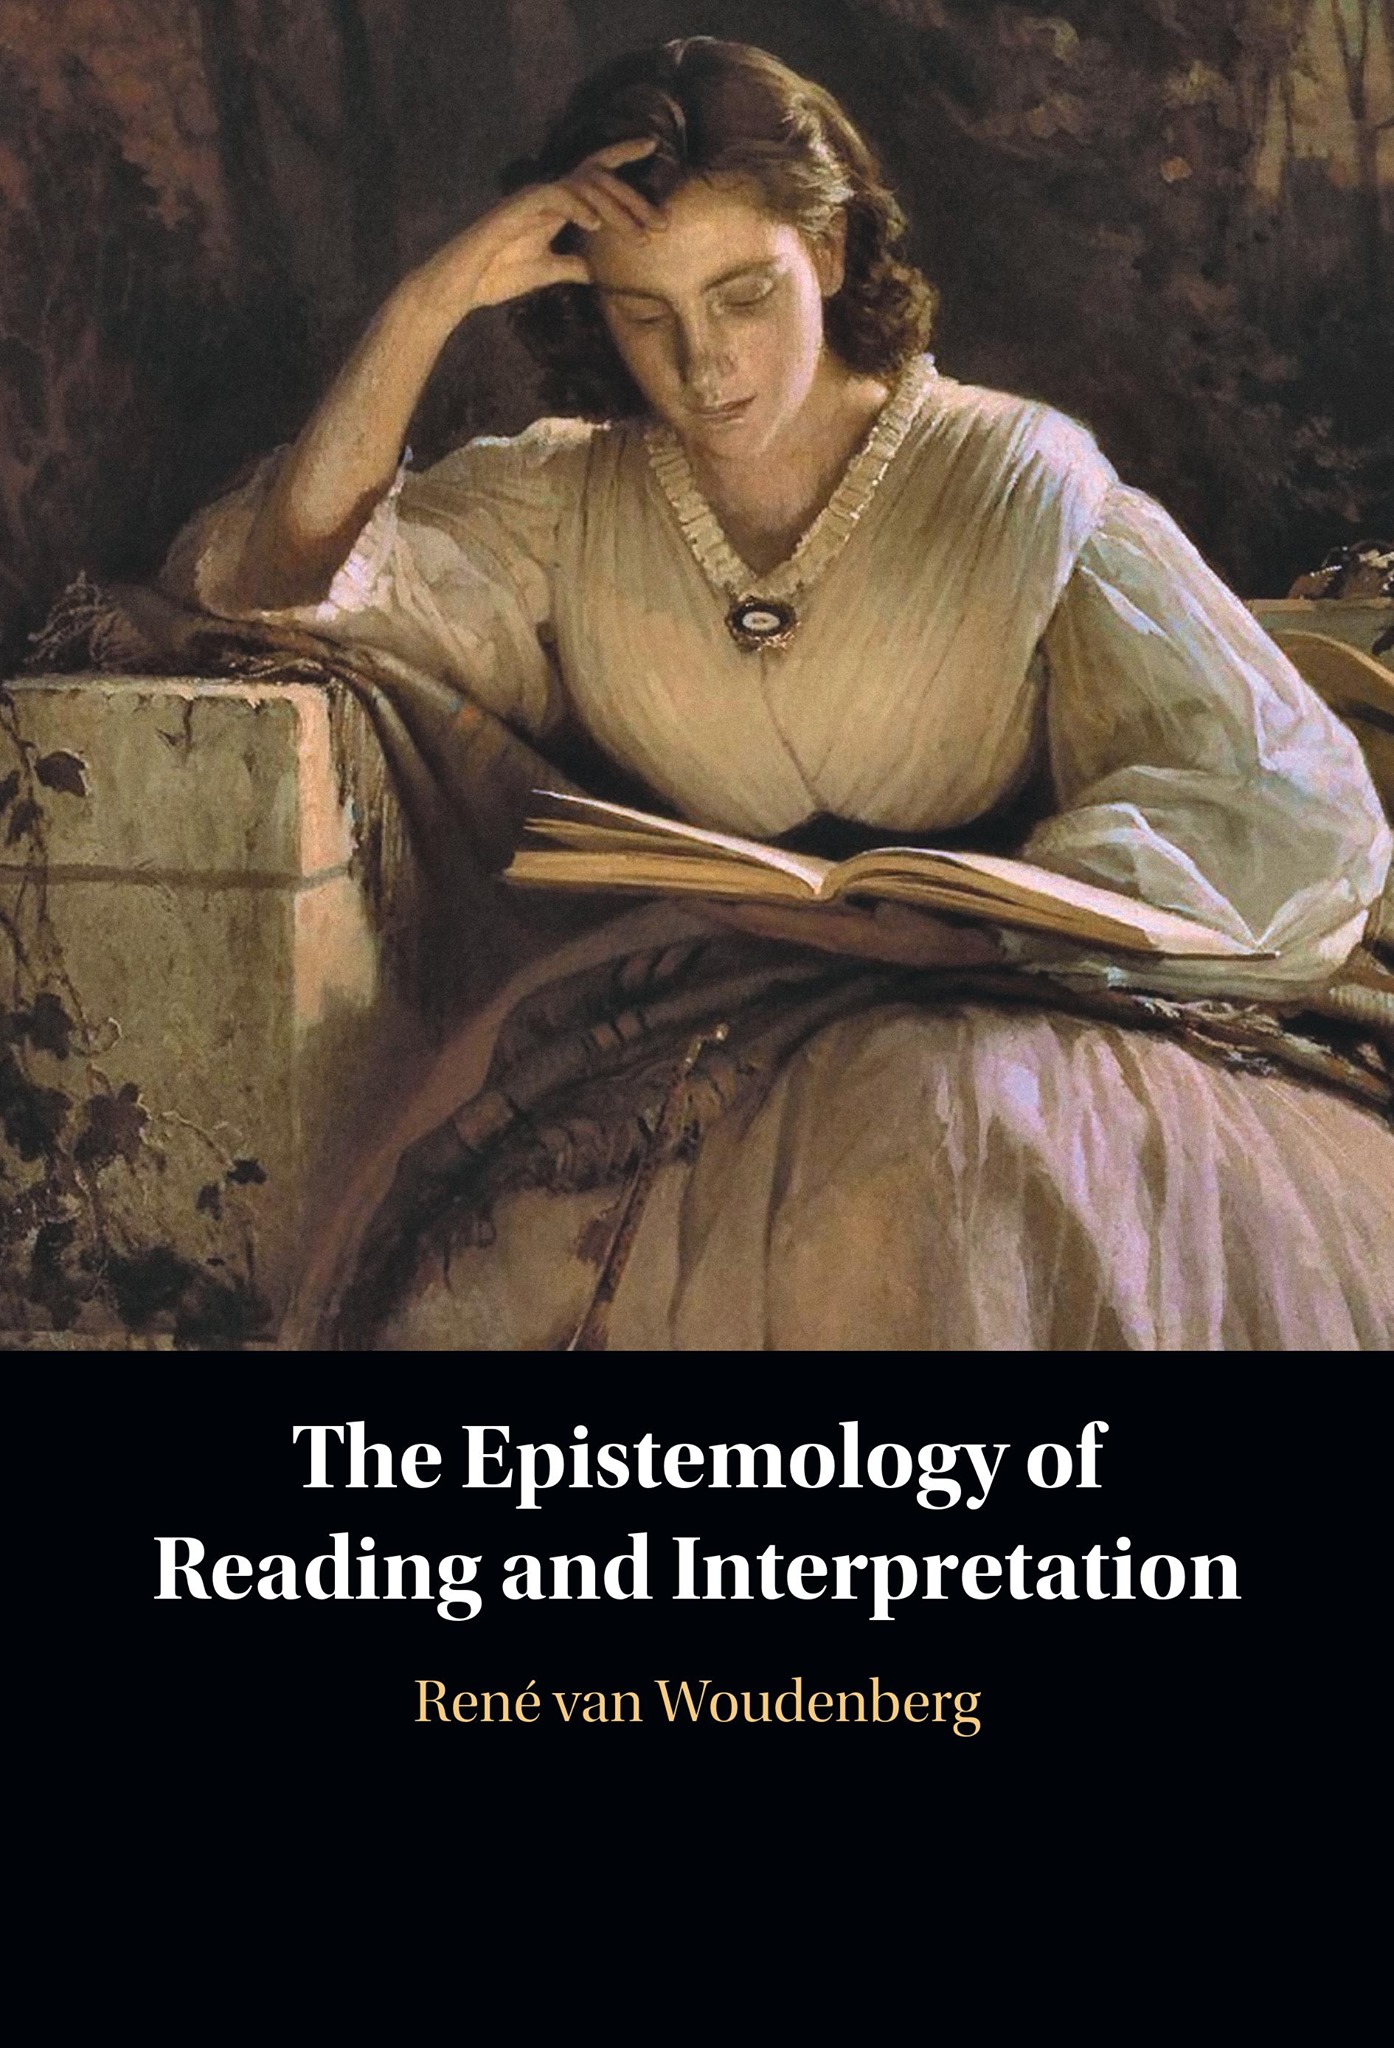 The Epistemology of Reading and Interpretation, by René van Woudenberg